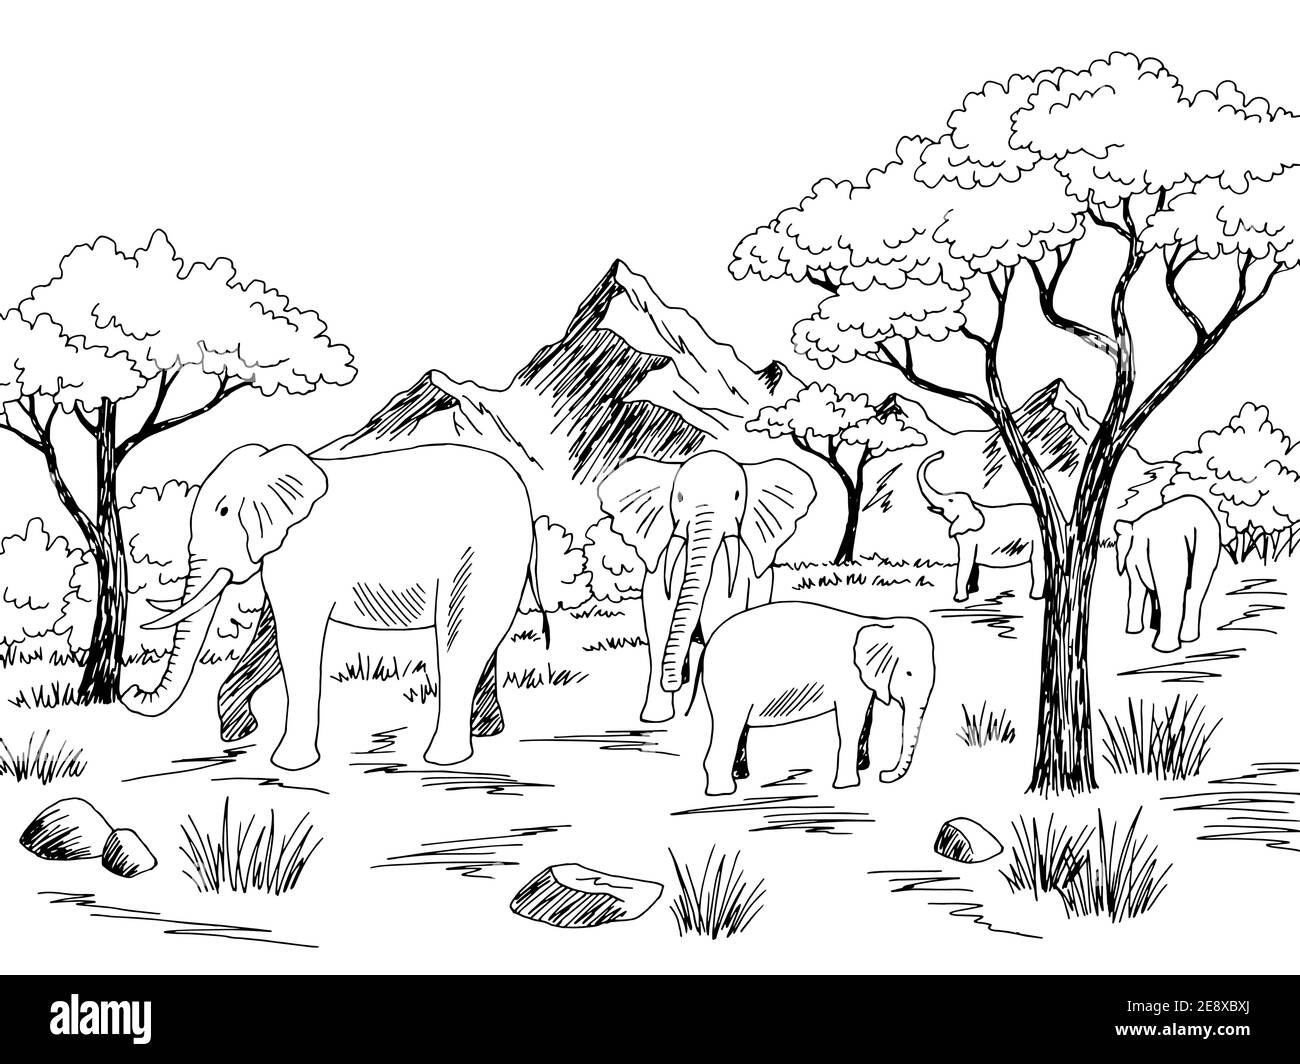 Elefant in Savanne Grafik schwarz weiß Landschaft Skizze Illustration Vektor Stock Vektor